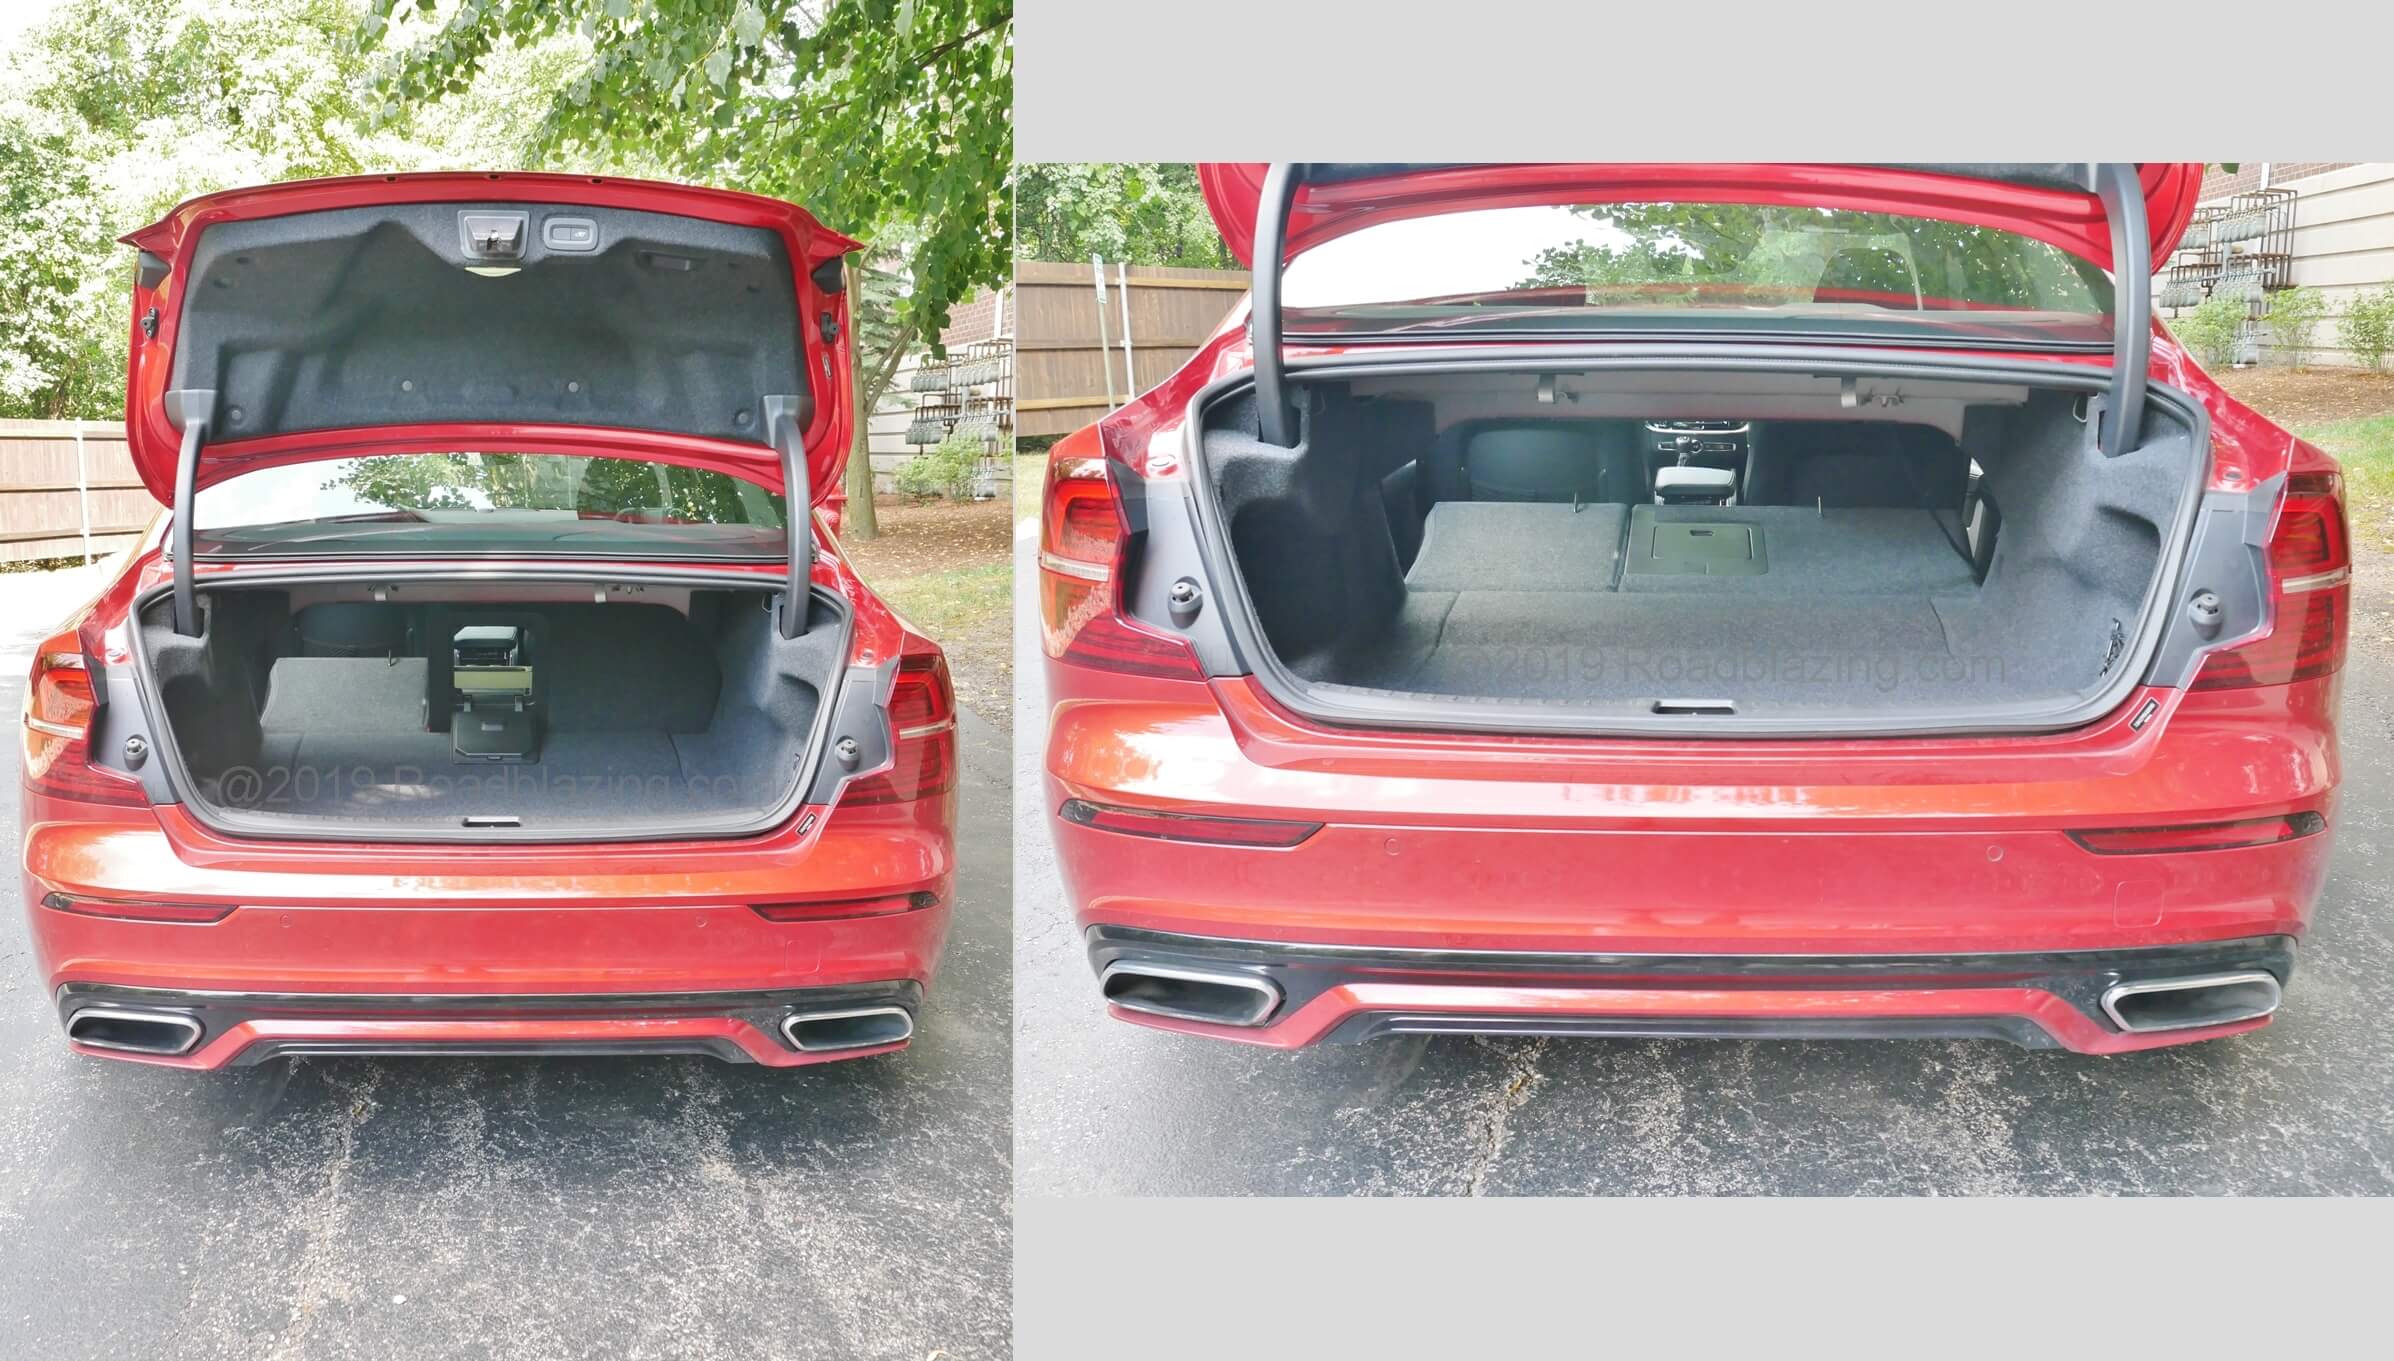 2019 Volvo S60 T6 R-Design: expansion of 13.8 cubic foot trunk via power 60/40% split flat fold rear seat backs.